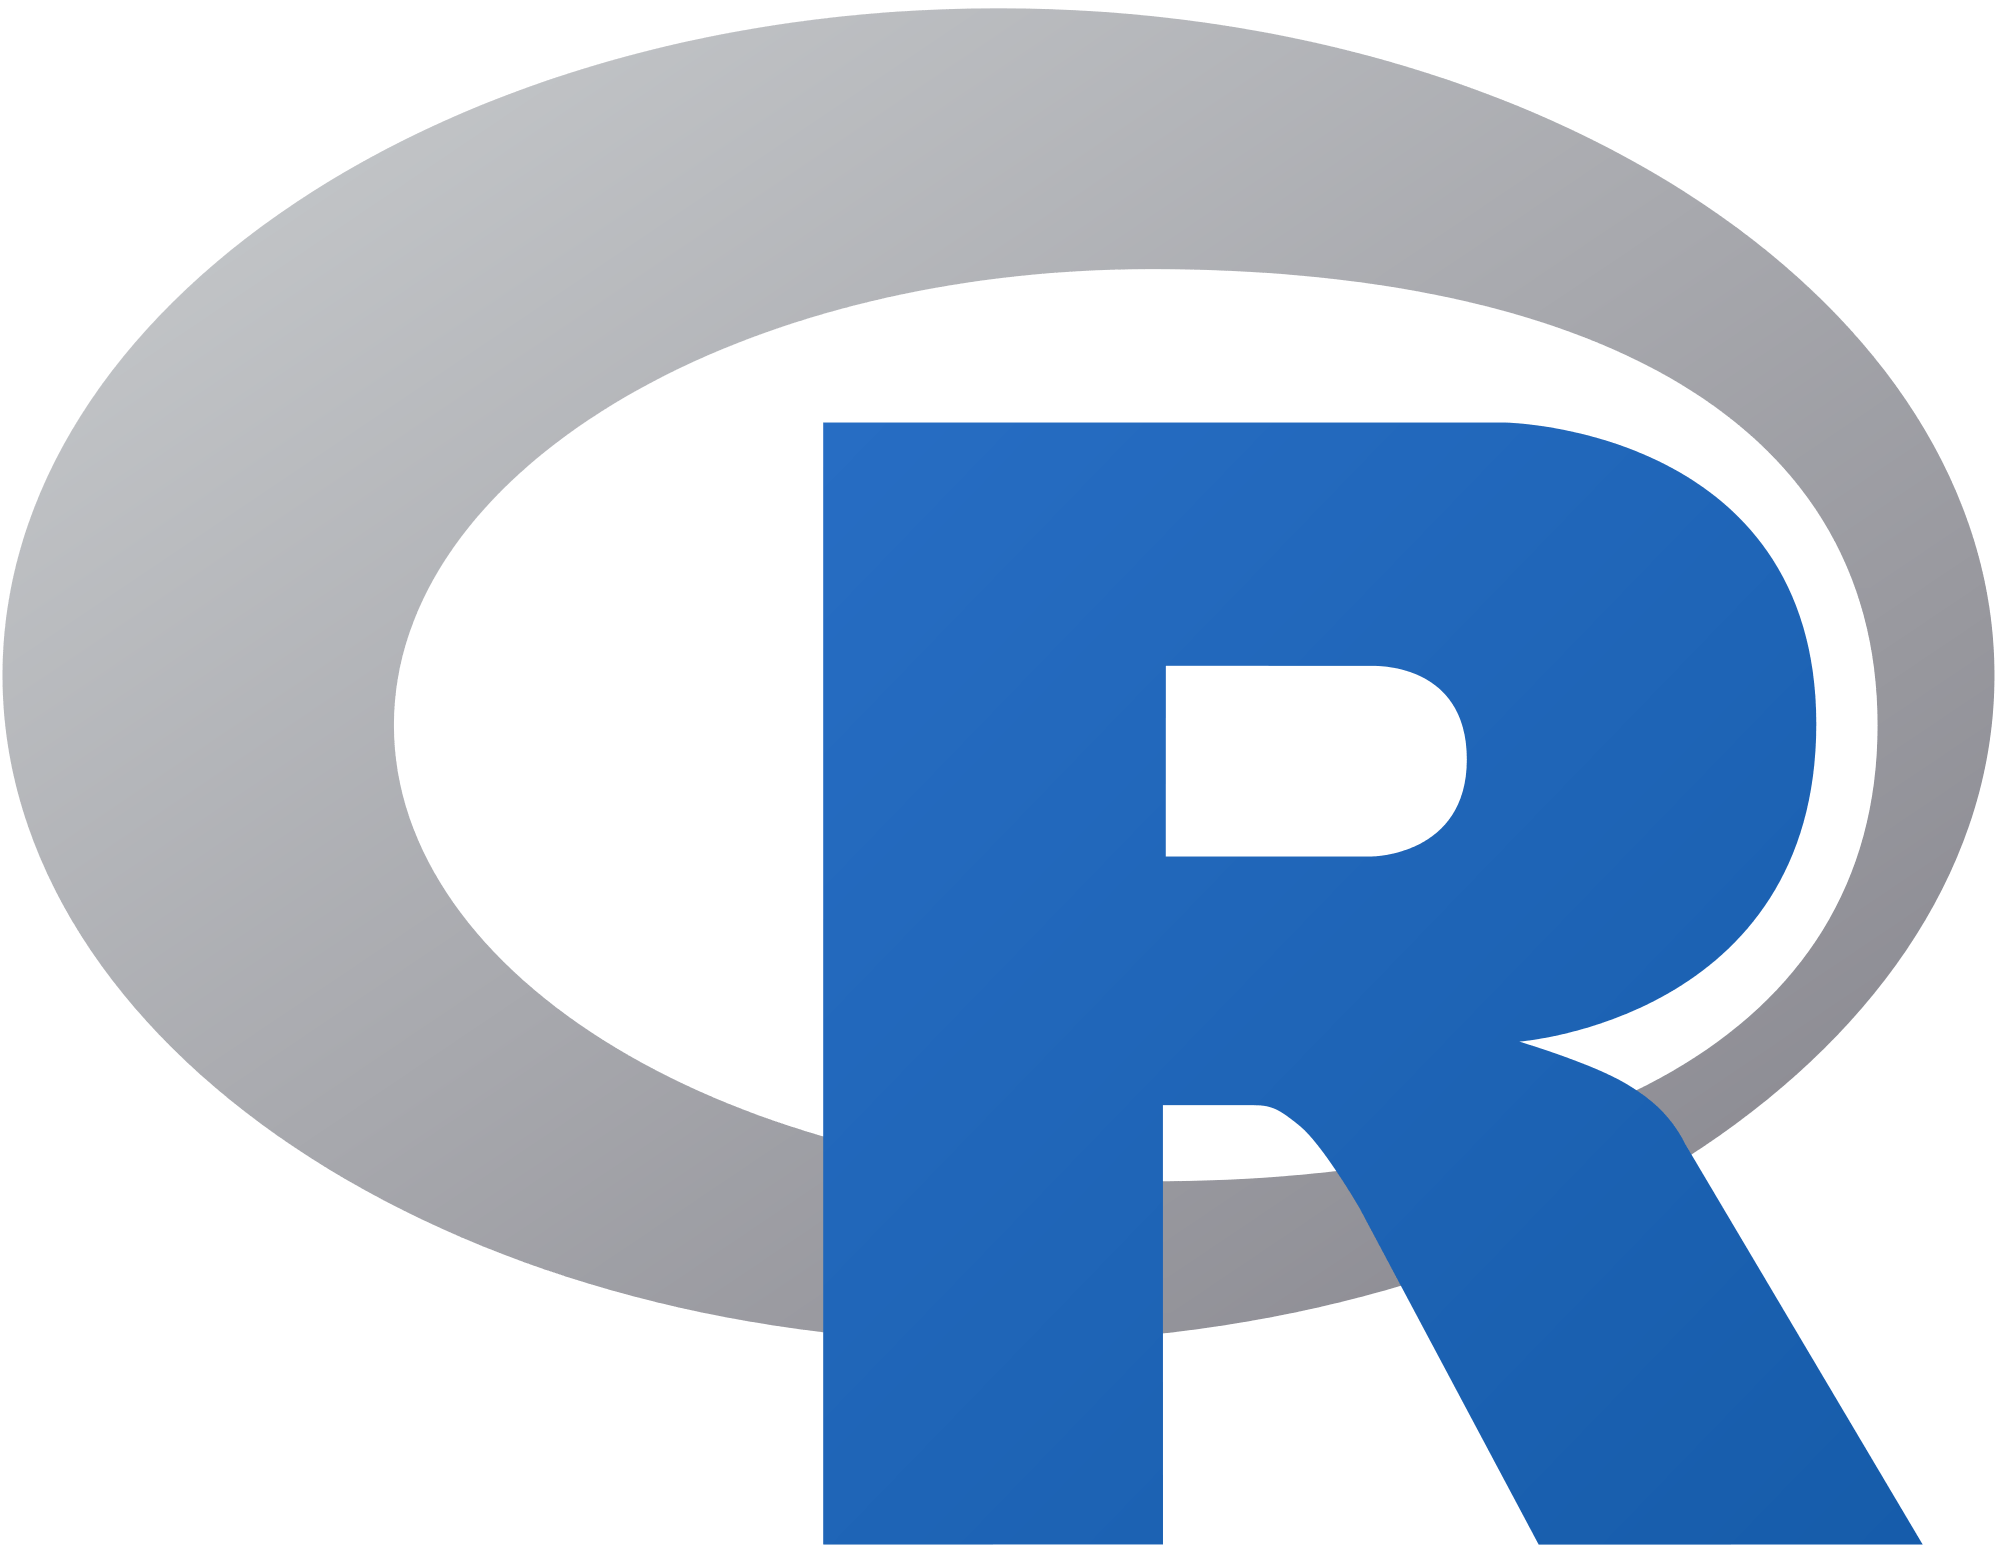 R and R Logo - R (programming language)